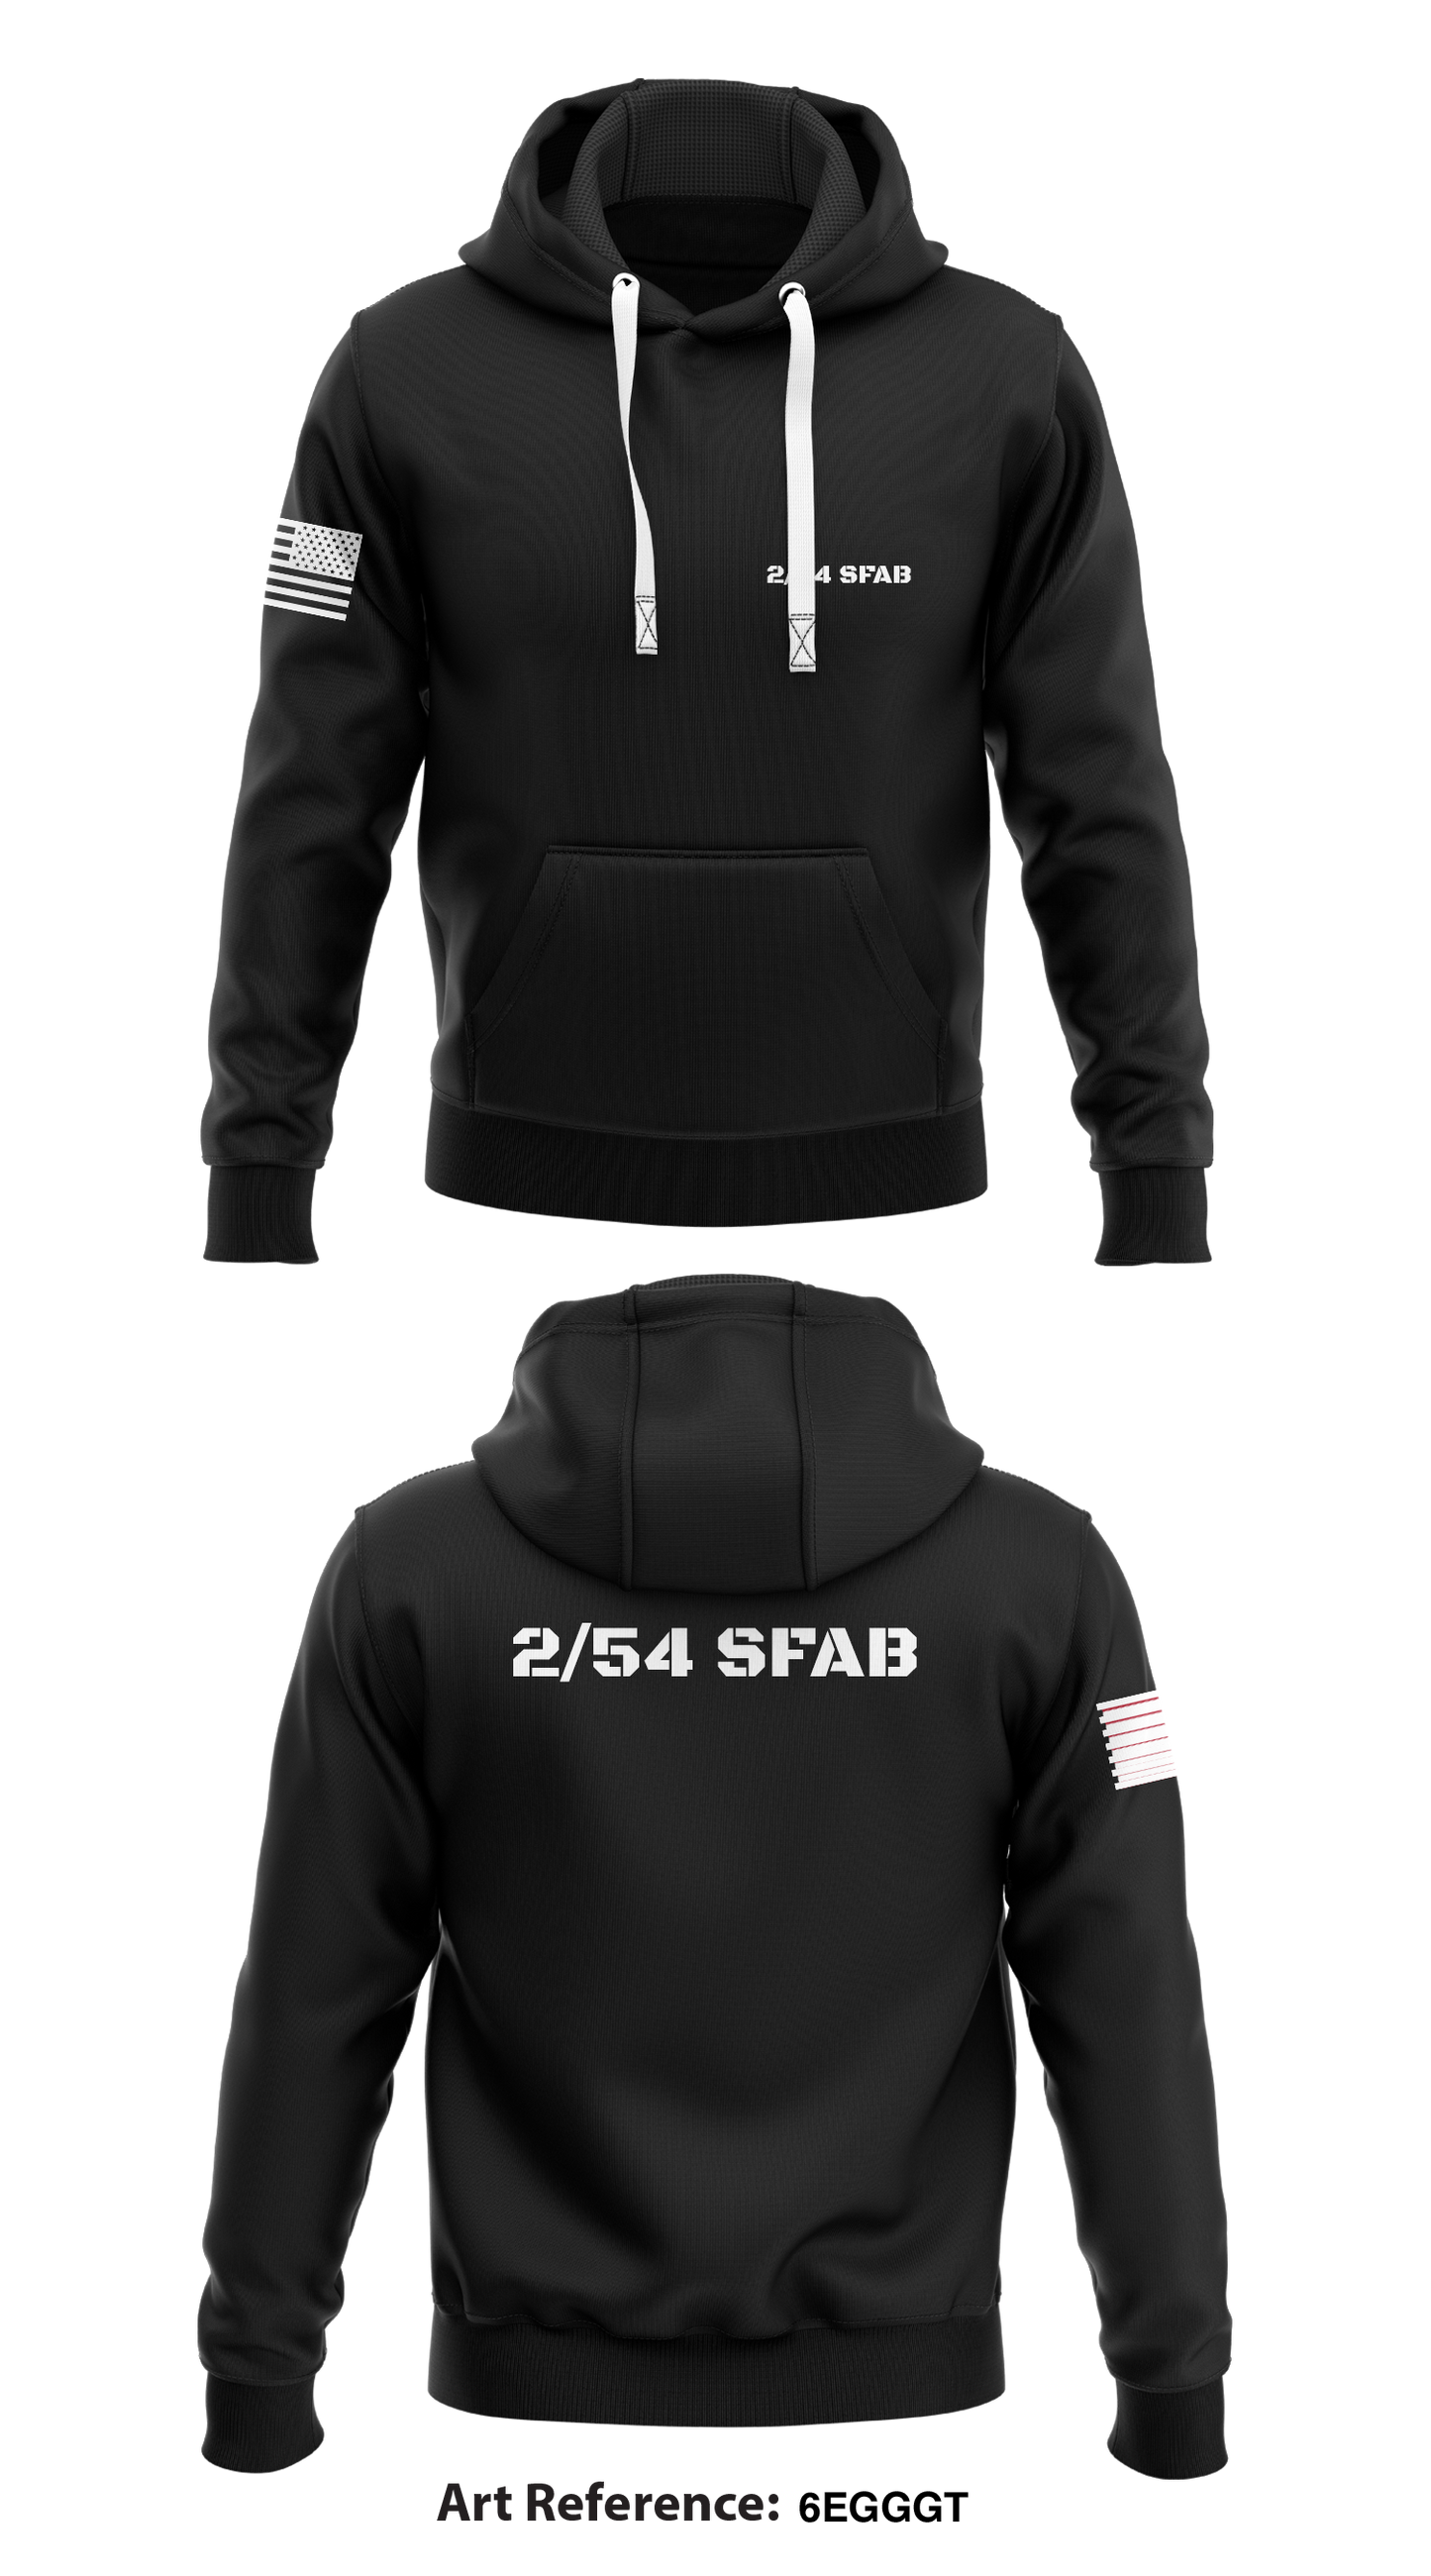 2/54 SFAB Store 1  Core Men's Hooded Performance Sweatshirt - 6EggGT